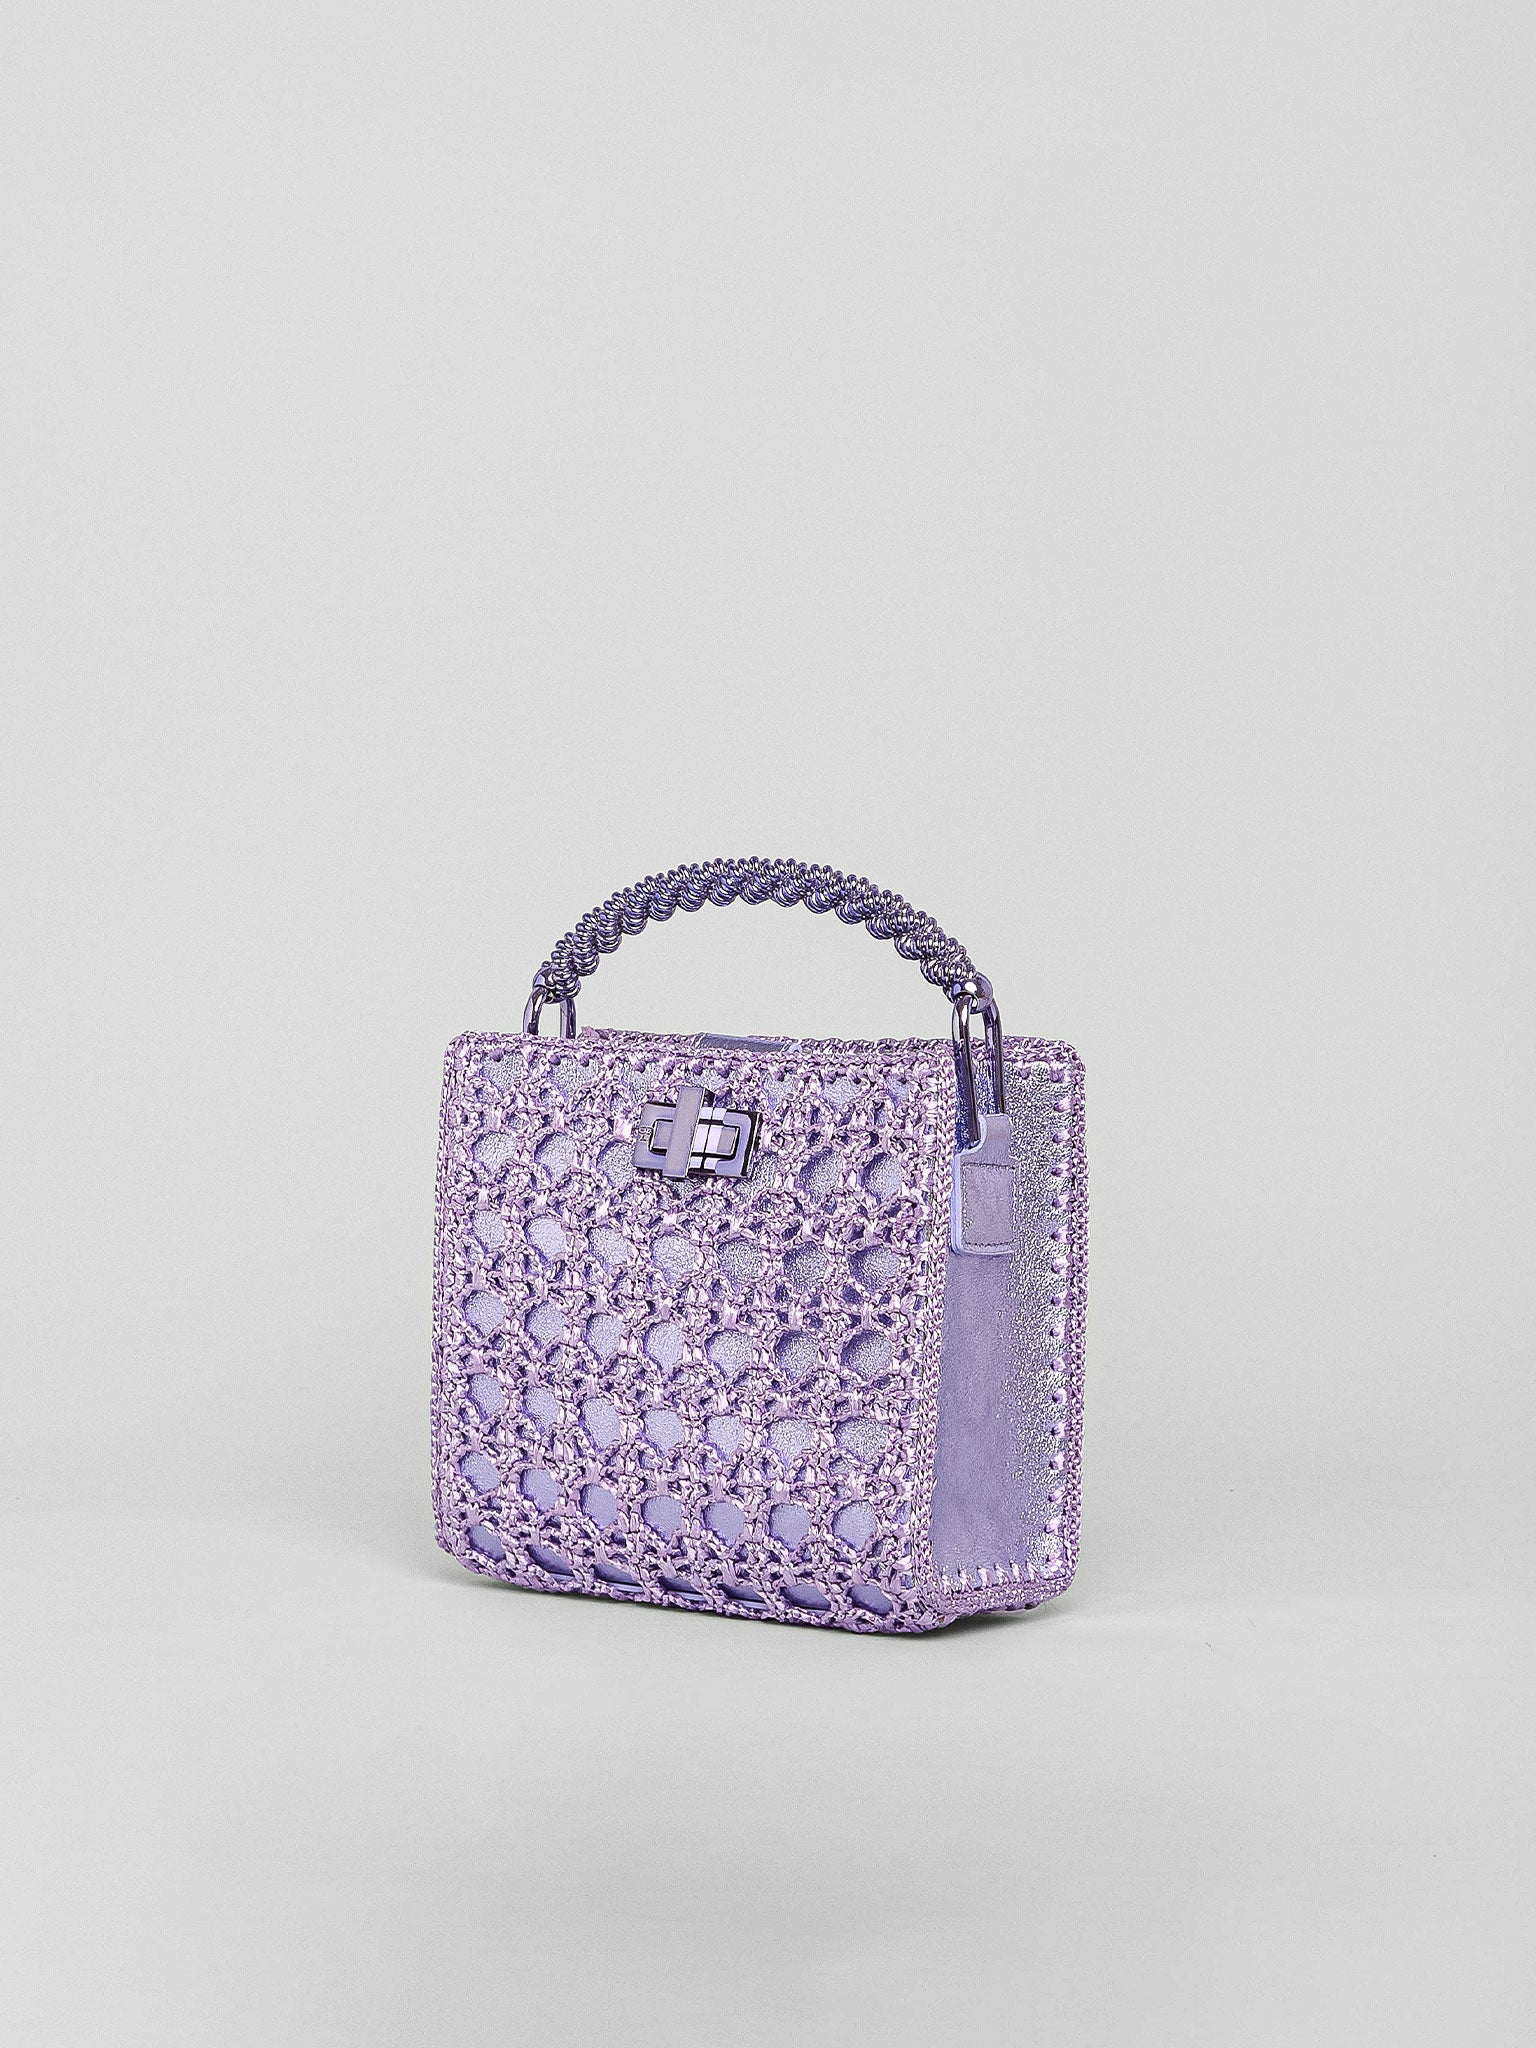 Sylvia Piccola Crochet Limited Edition Metallic Pervinca